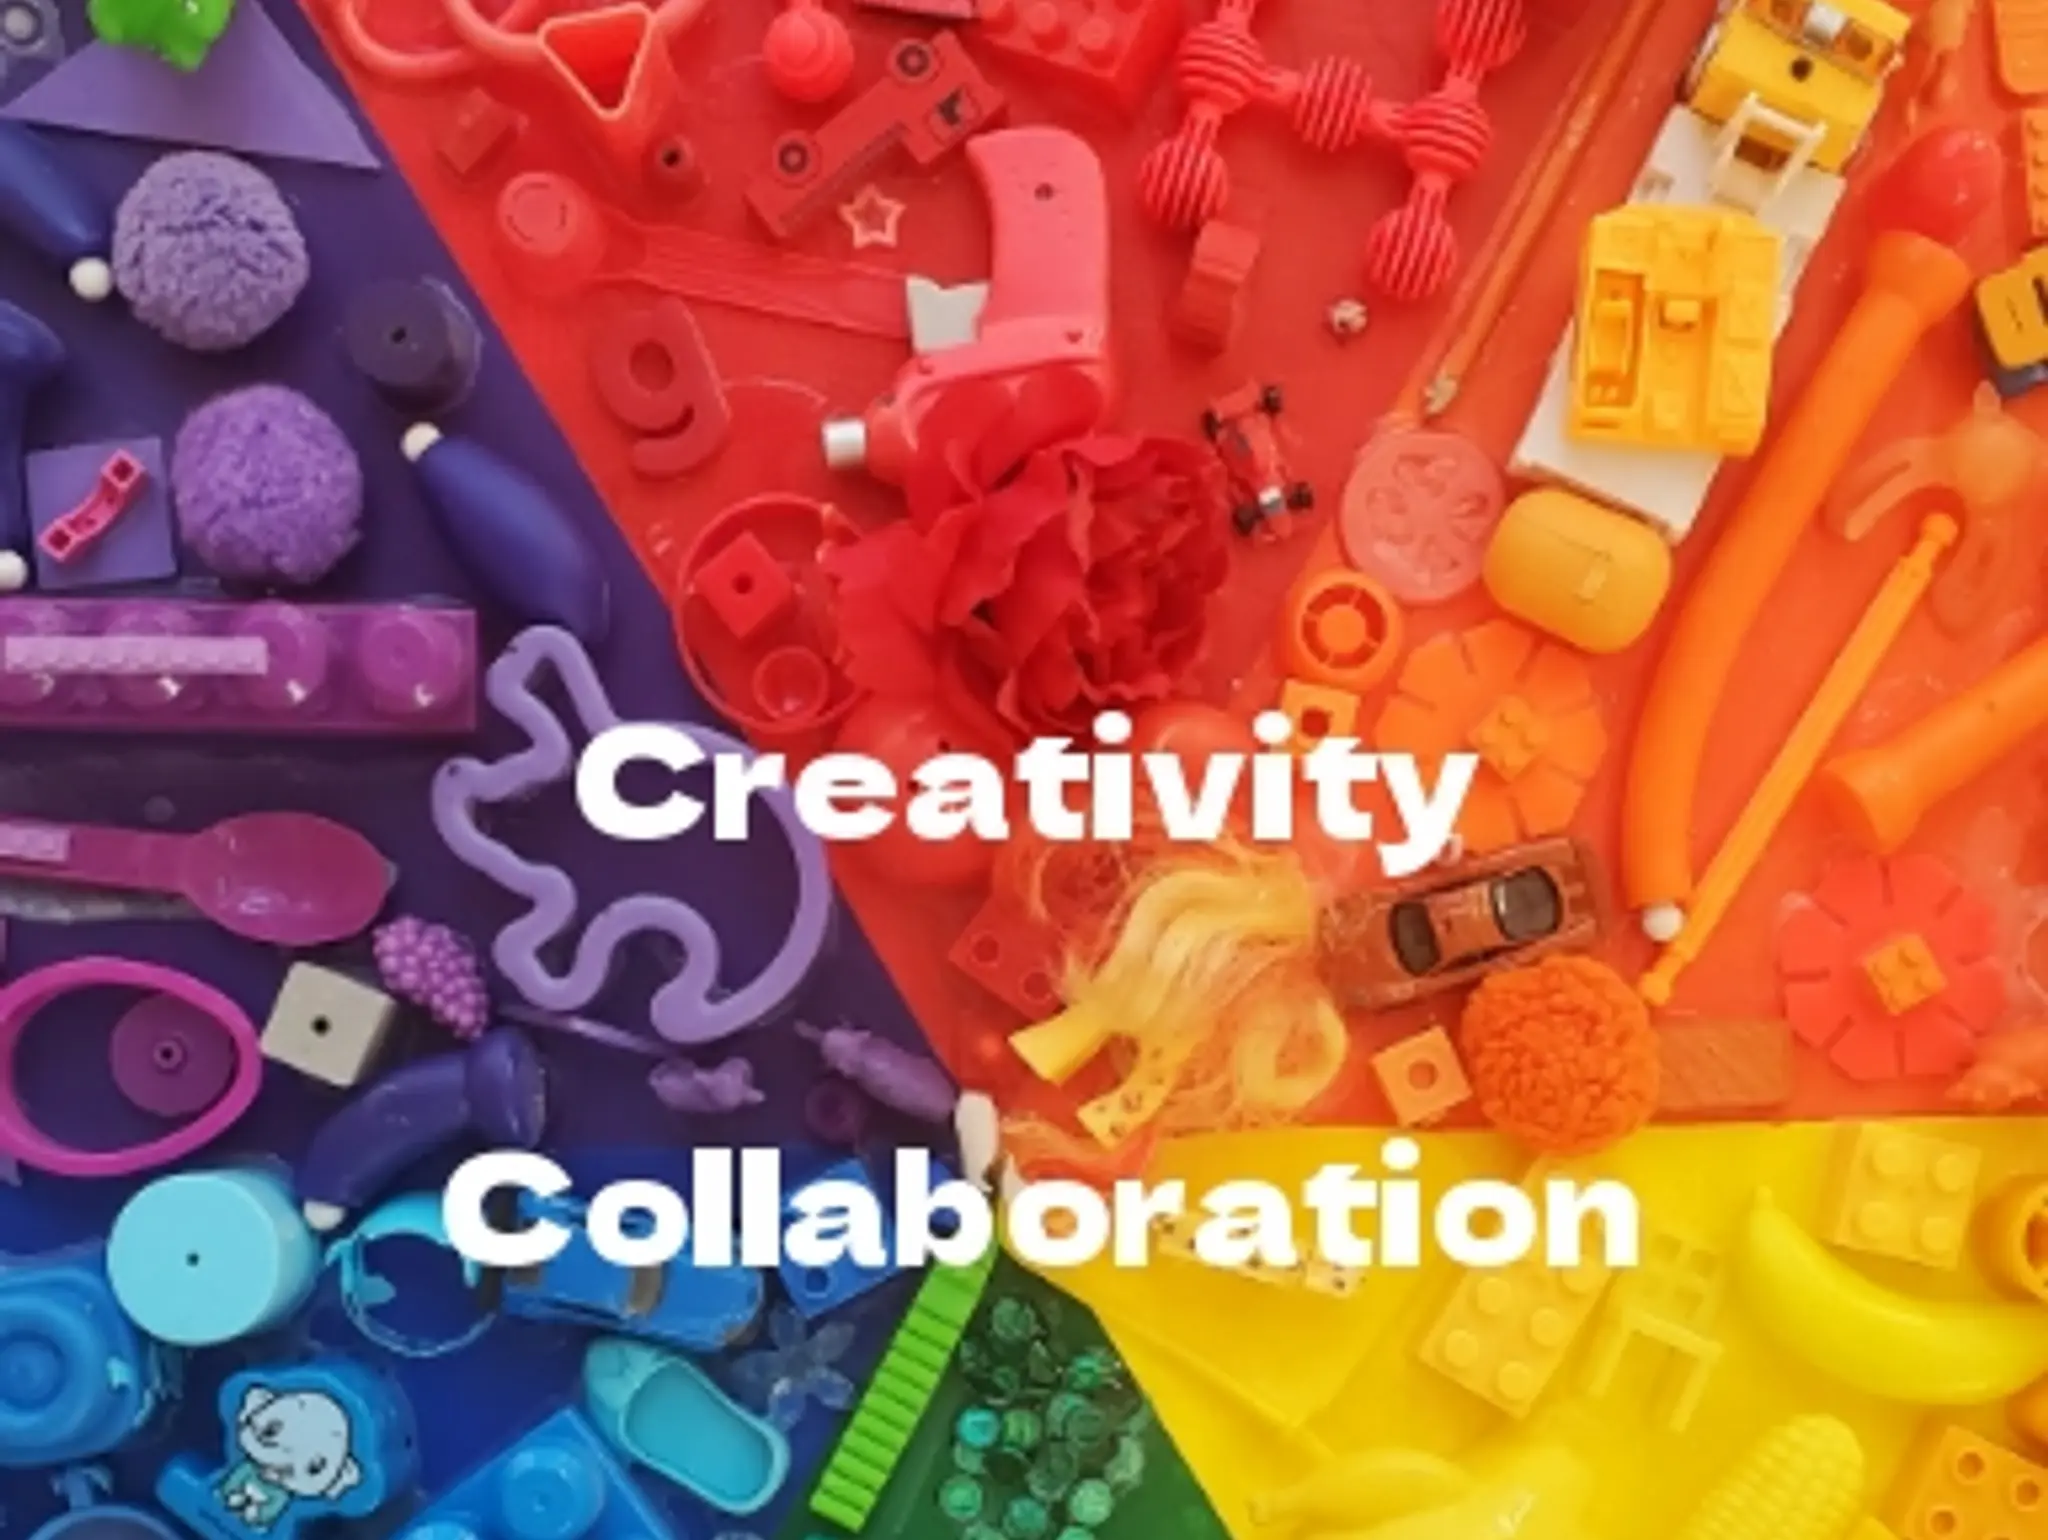 Creativity, Collaboration, Resilience!